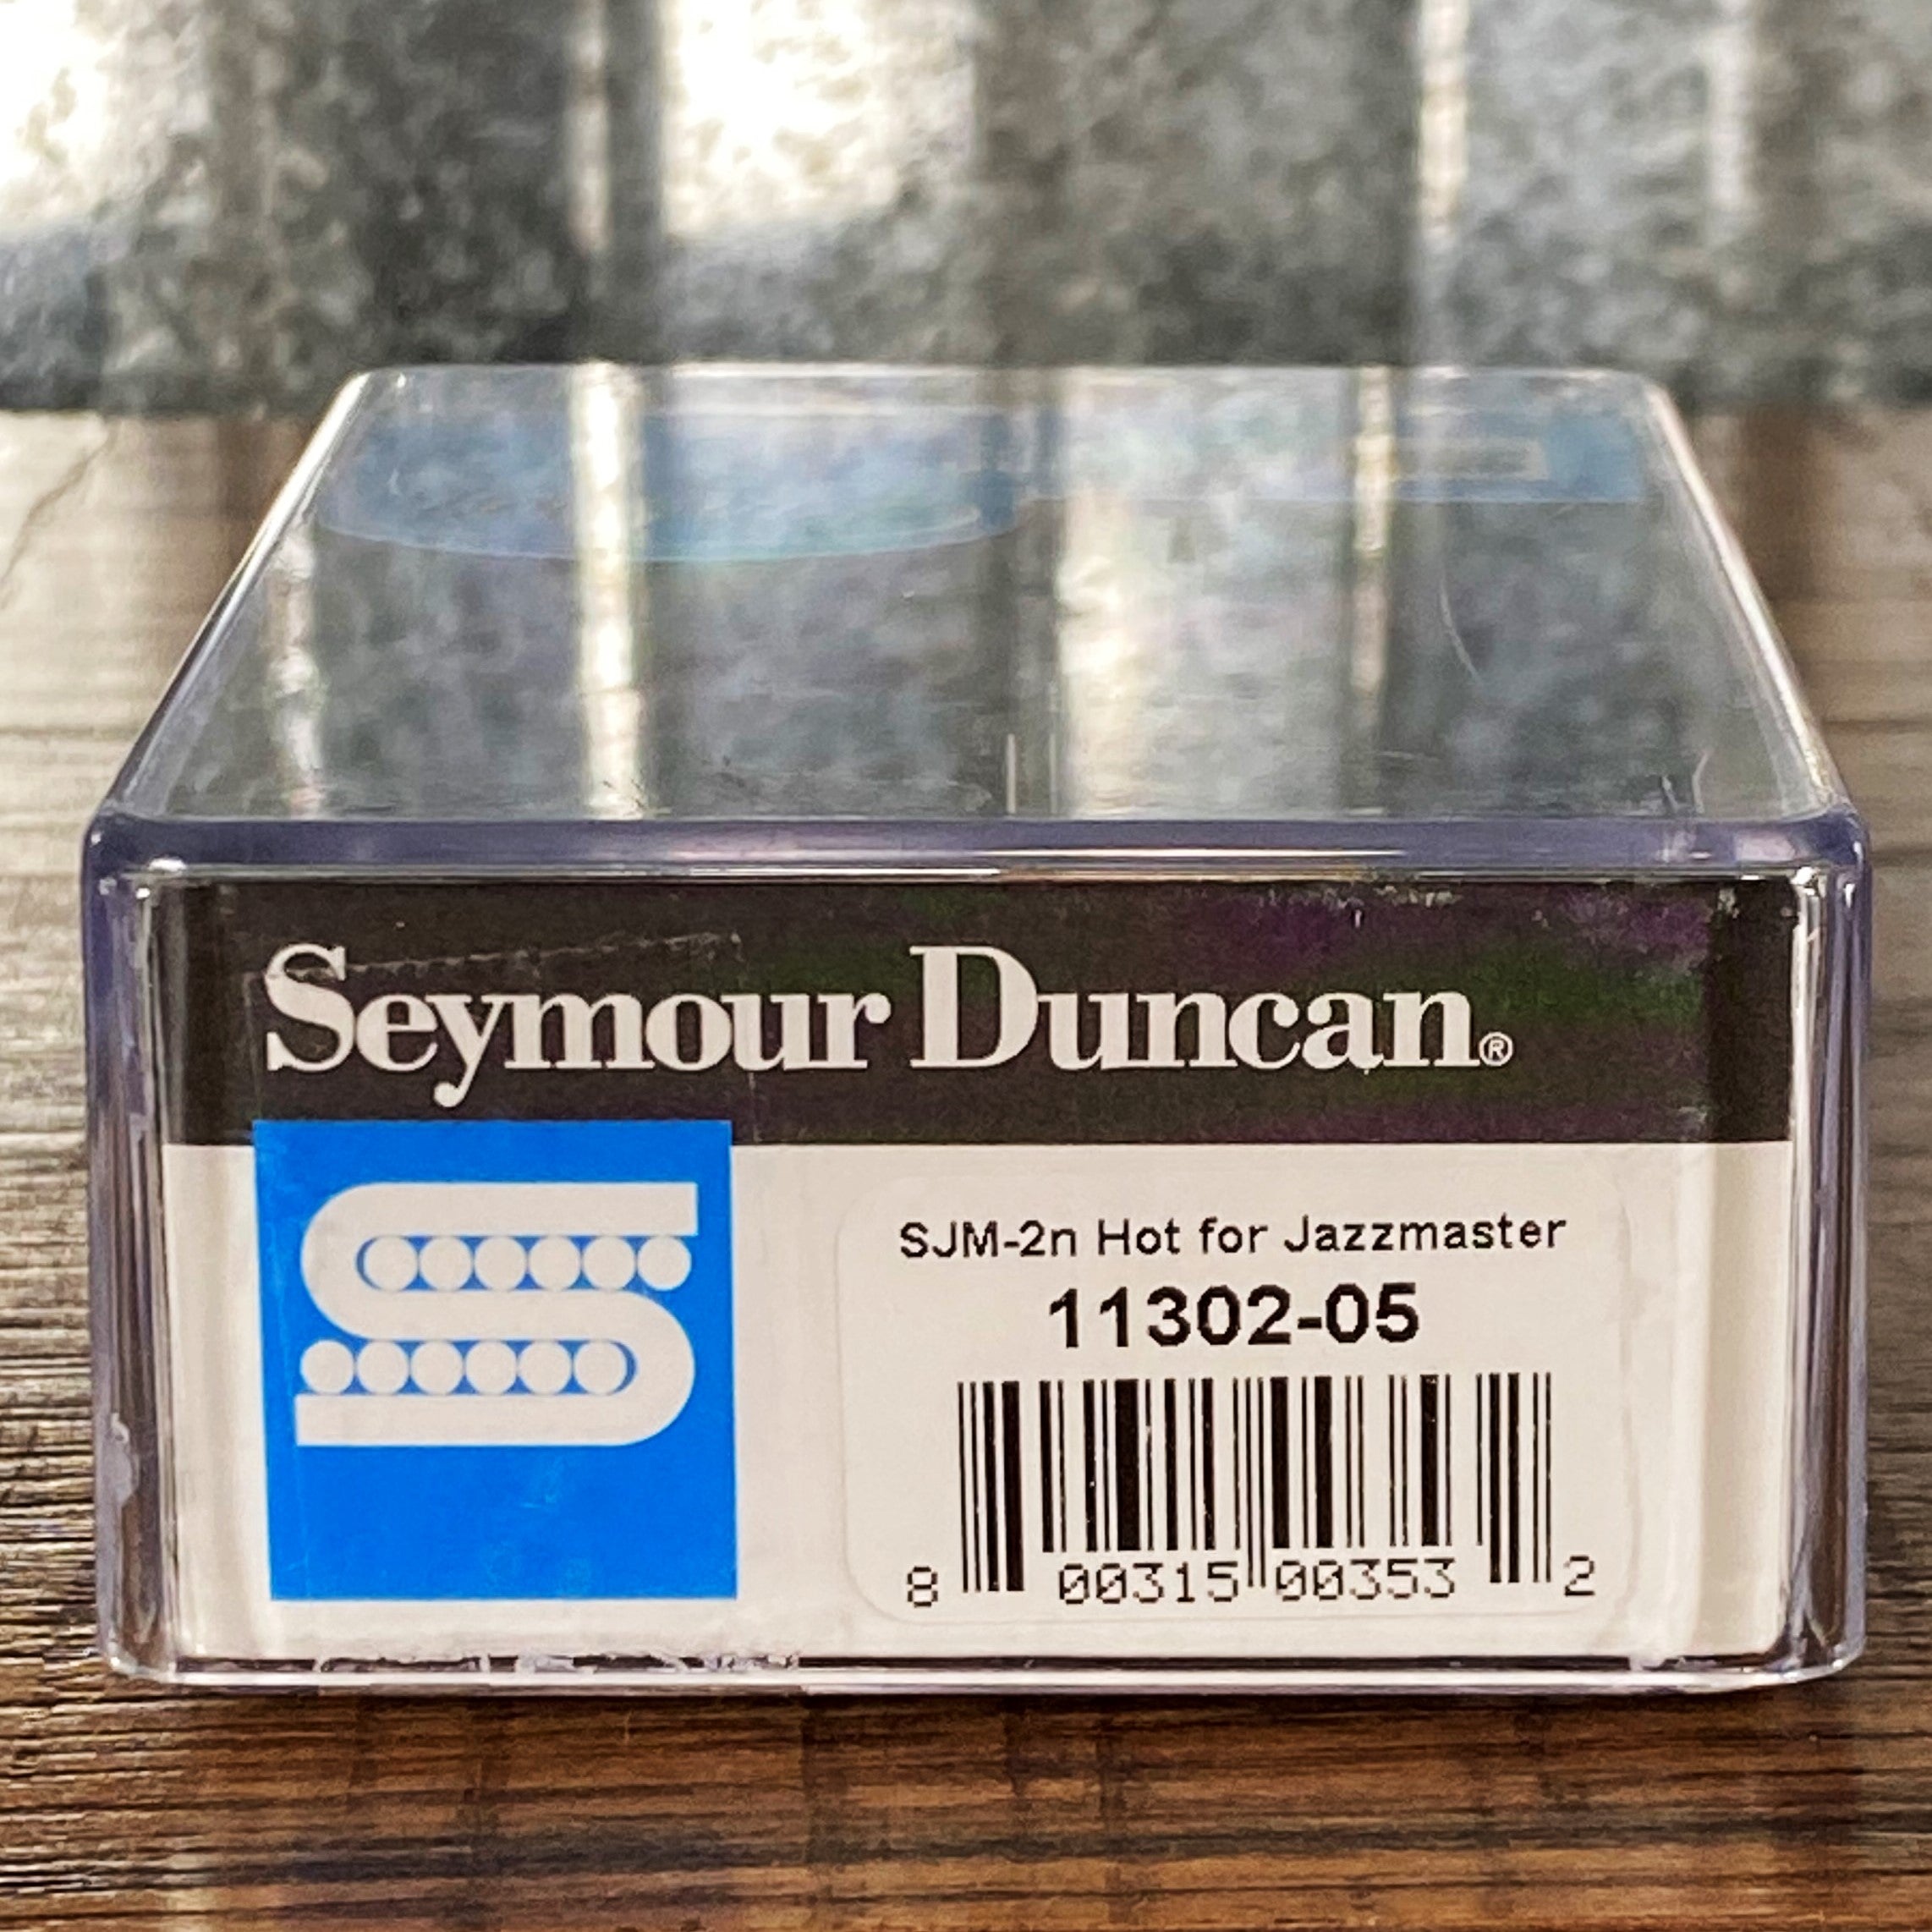 Seymour Duncan SJM-2n Hot for Jazzmaster Guitar Pickup Neck Black